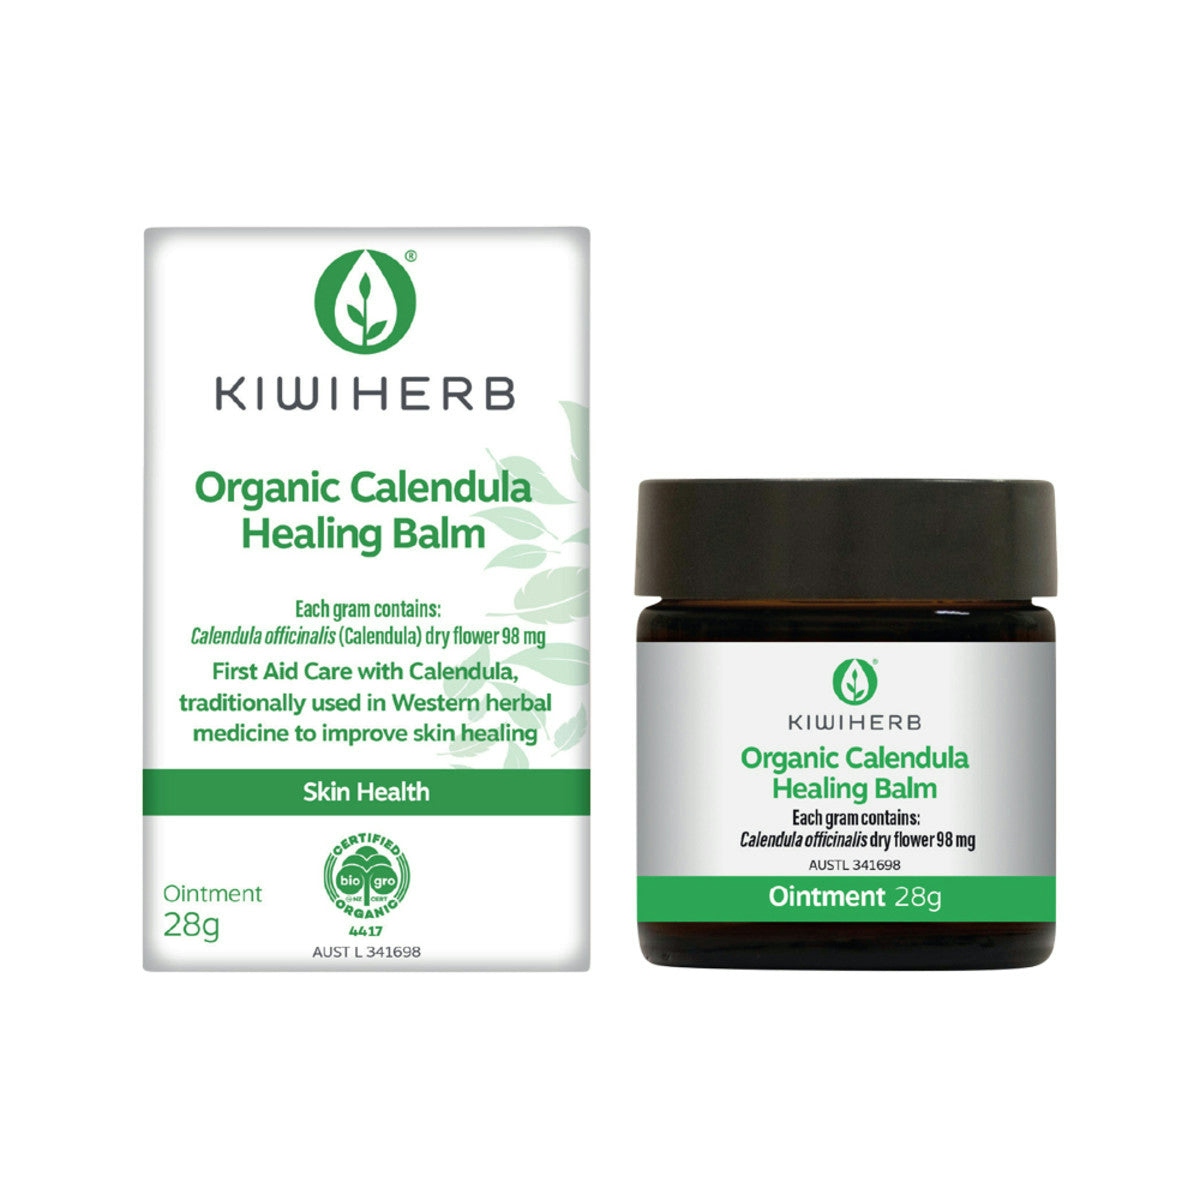 image of Kiwiherb Organic Calendula Healing Balm 28g on white background 